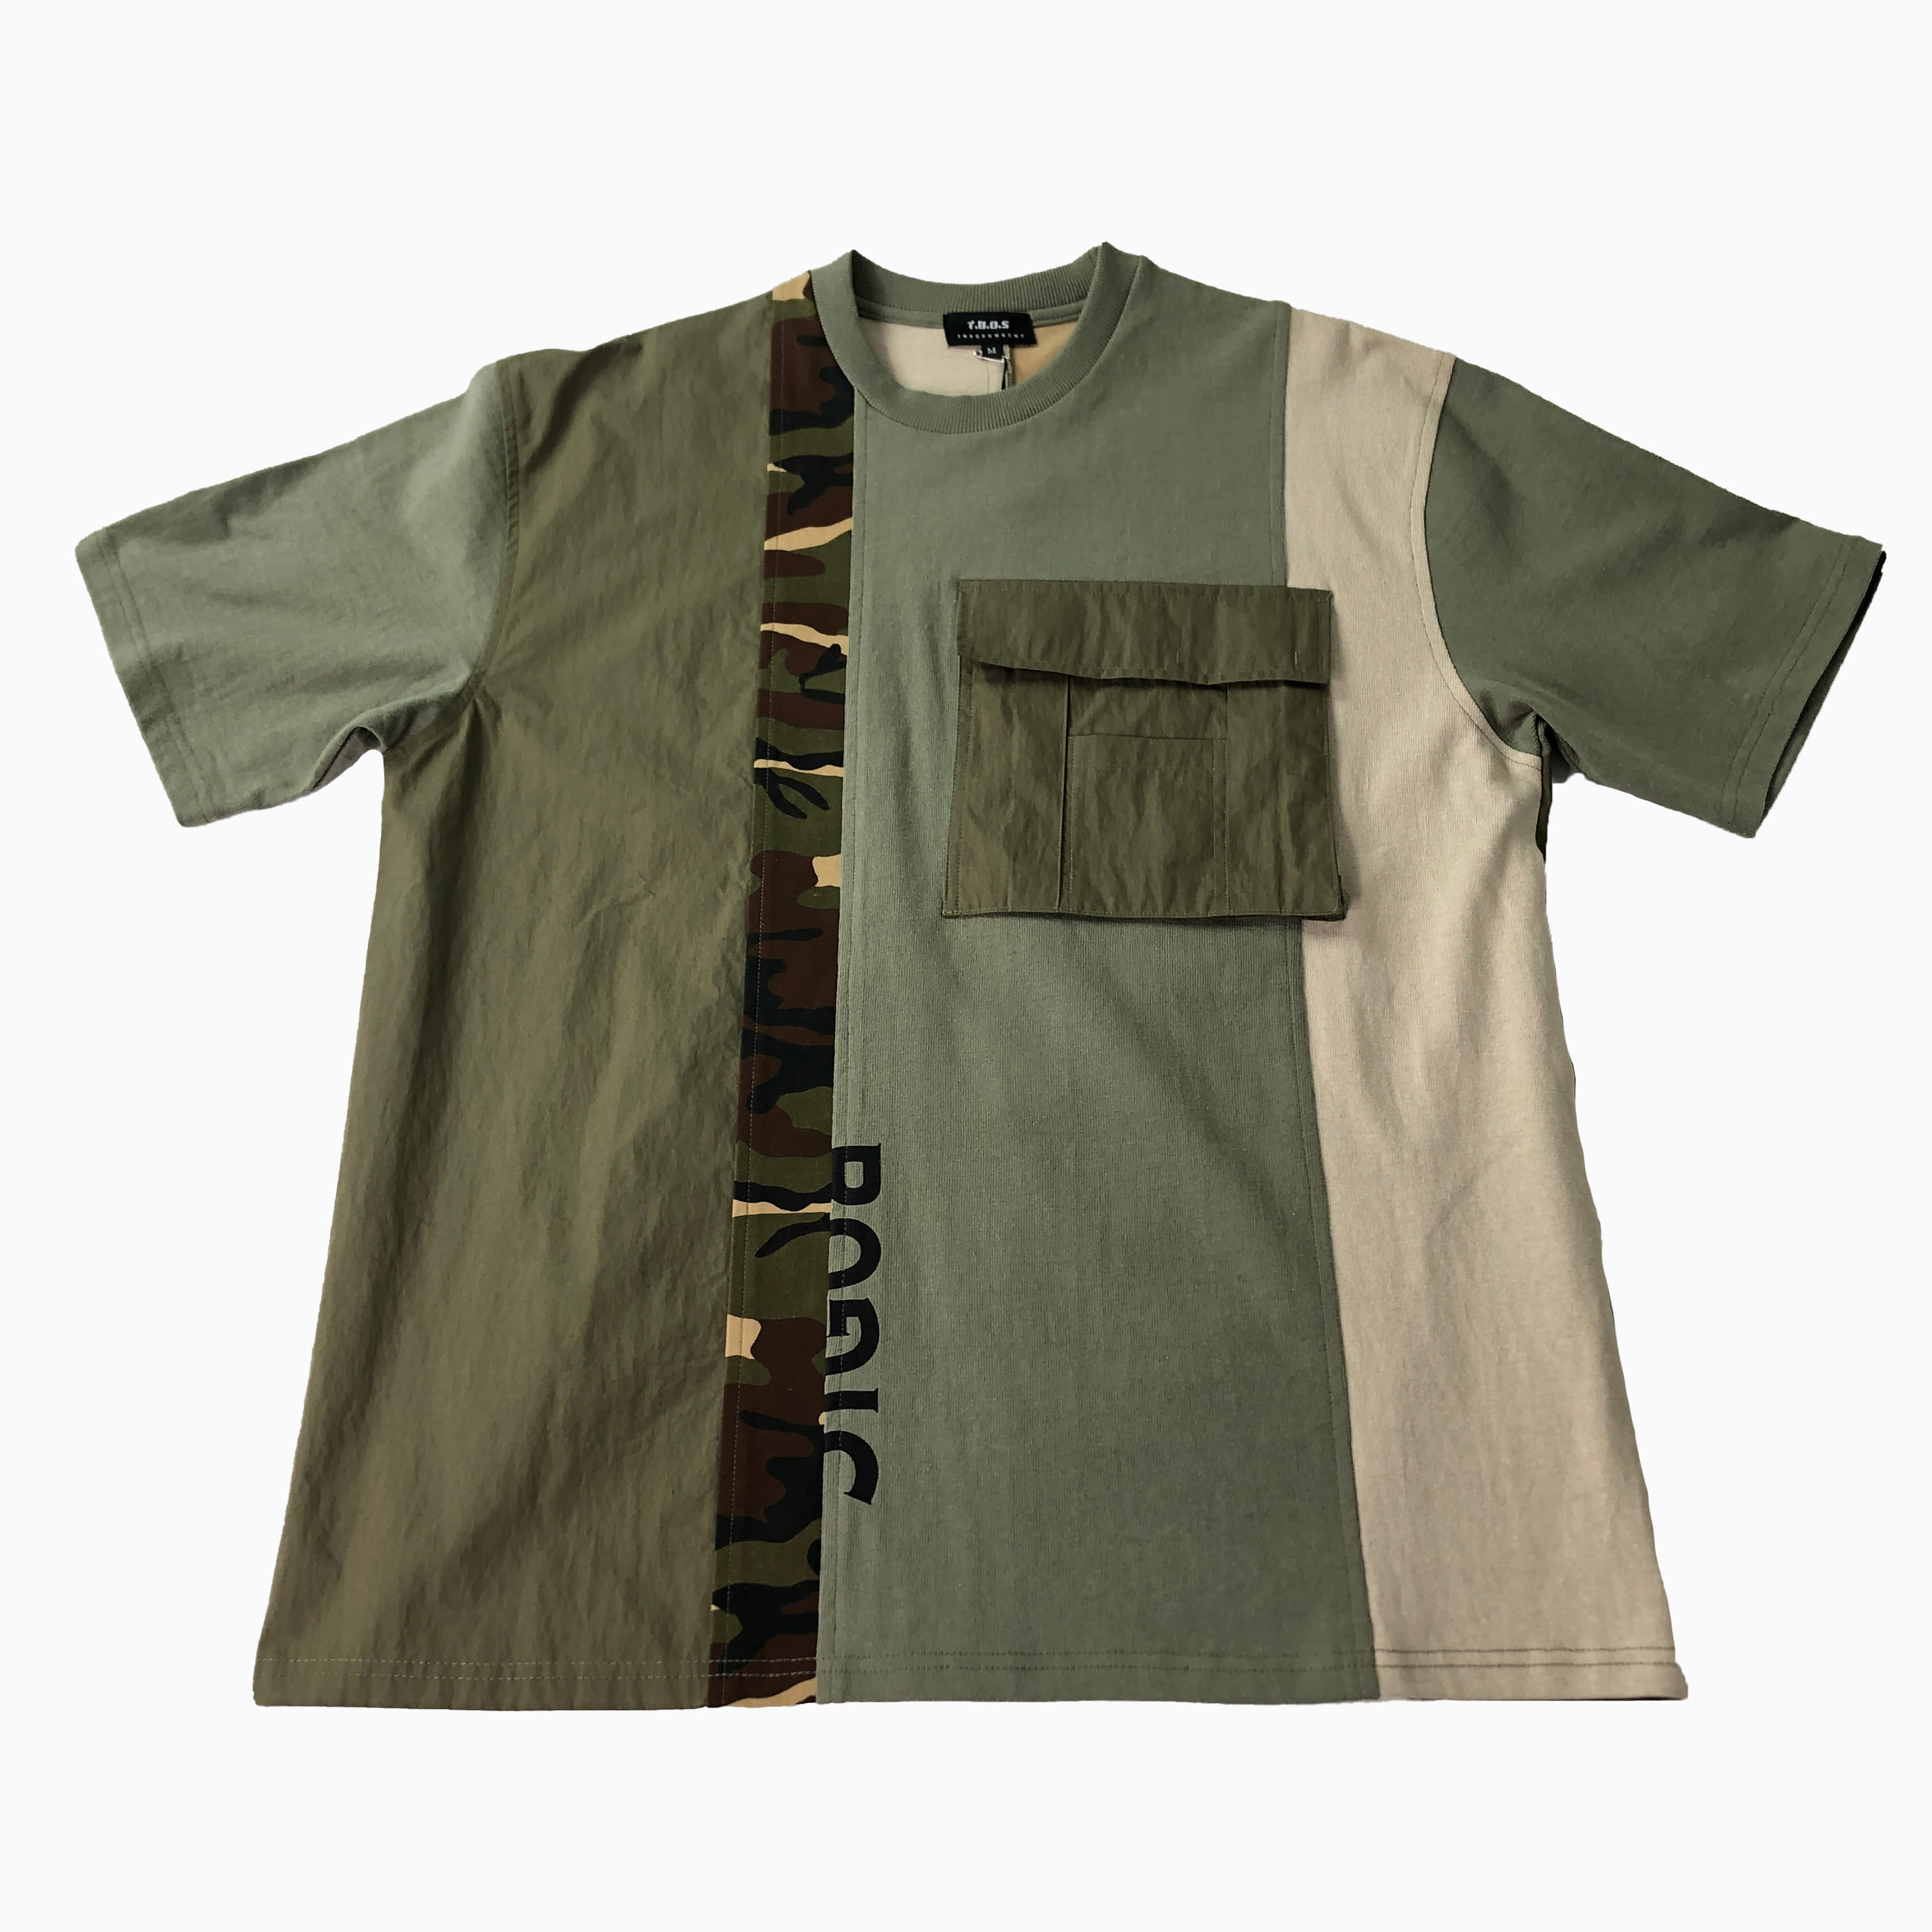 [T.B.O.S] Block Camo Short Sleeve T-shirt - Size M